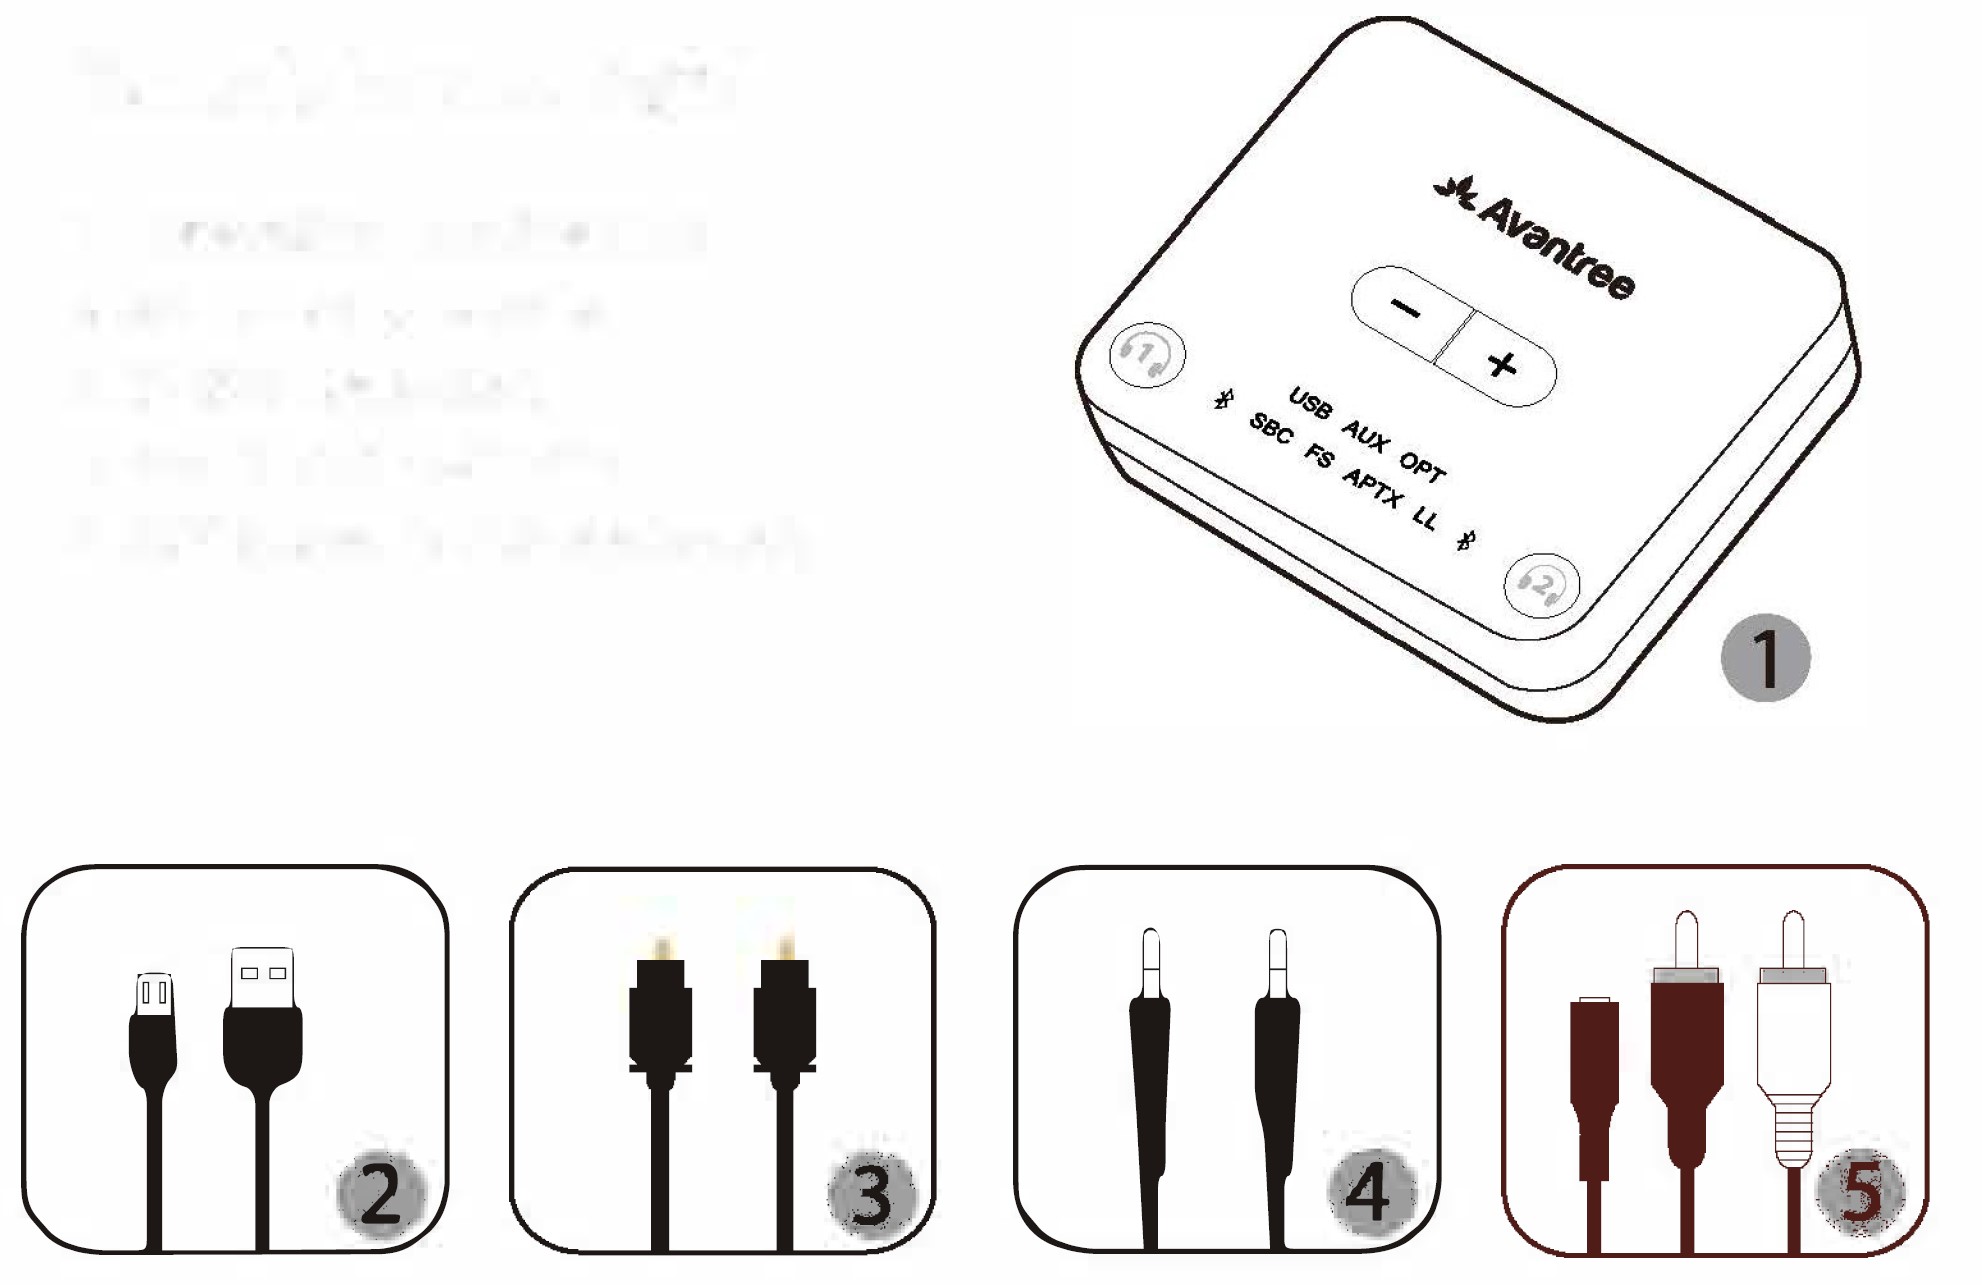 Avantree-Audikast-Plus-Wireless-Audio-Transmitter-Quick-Start-Guide-1